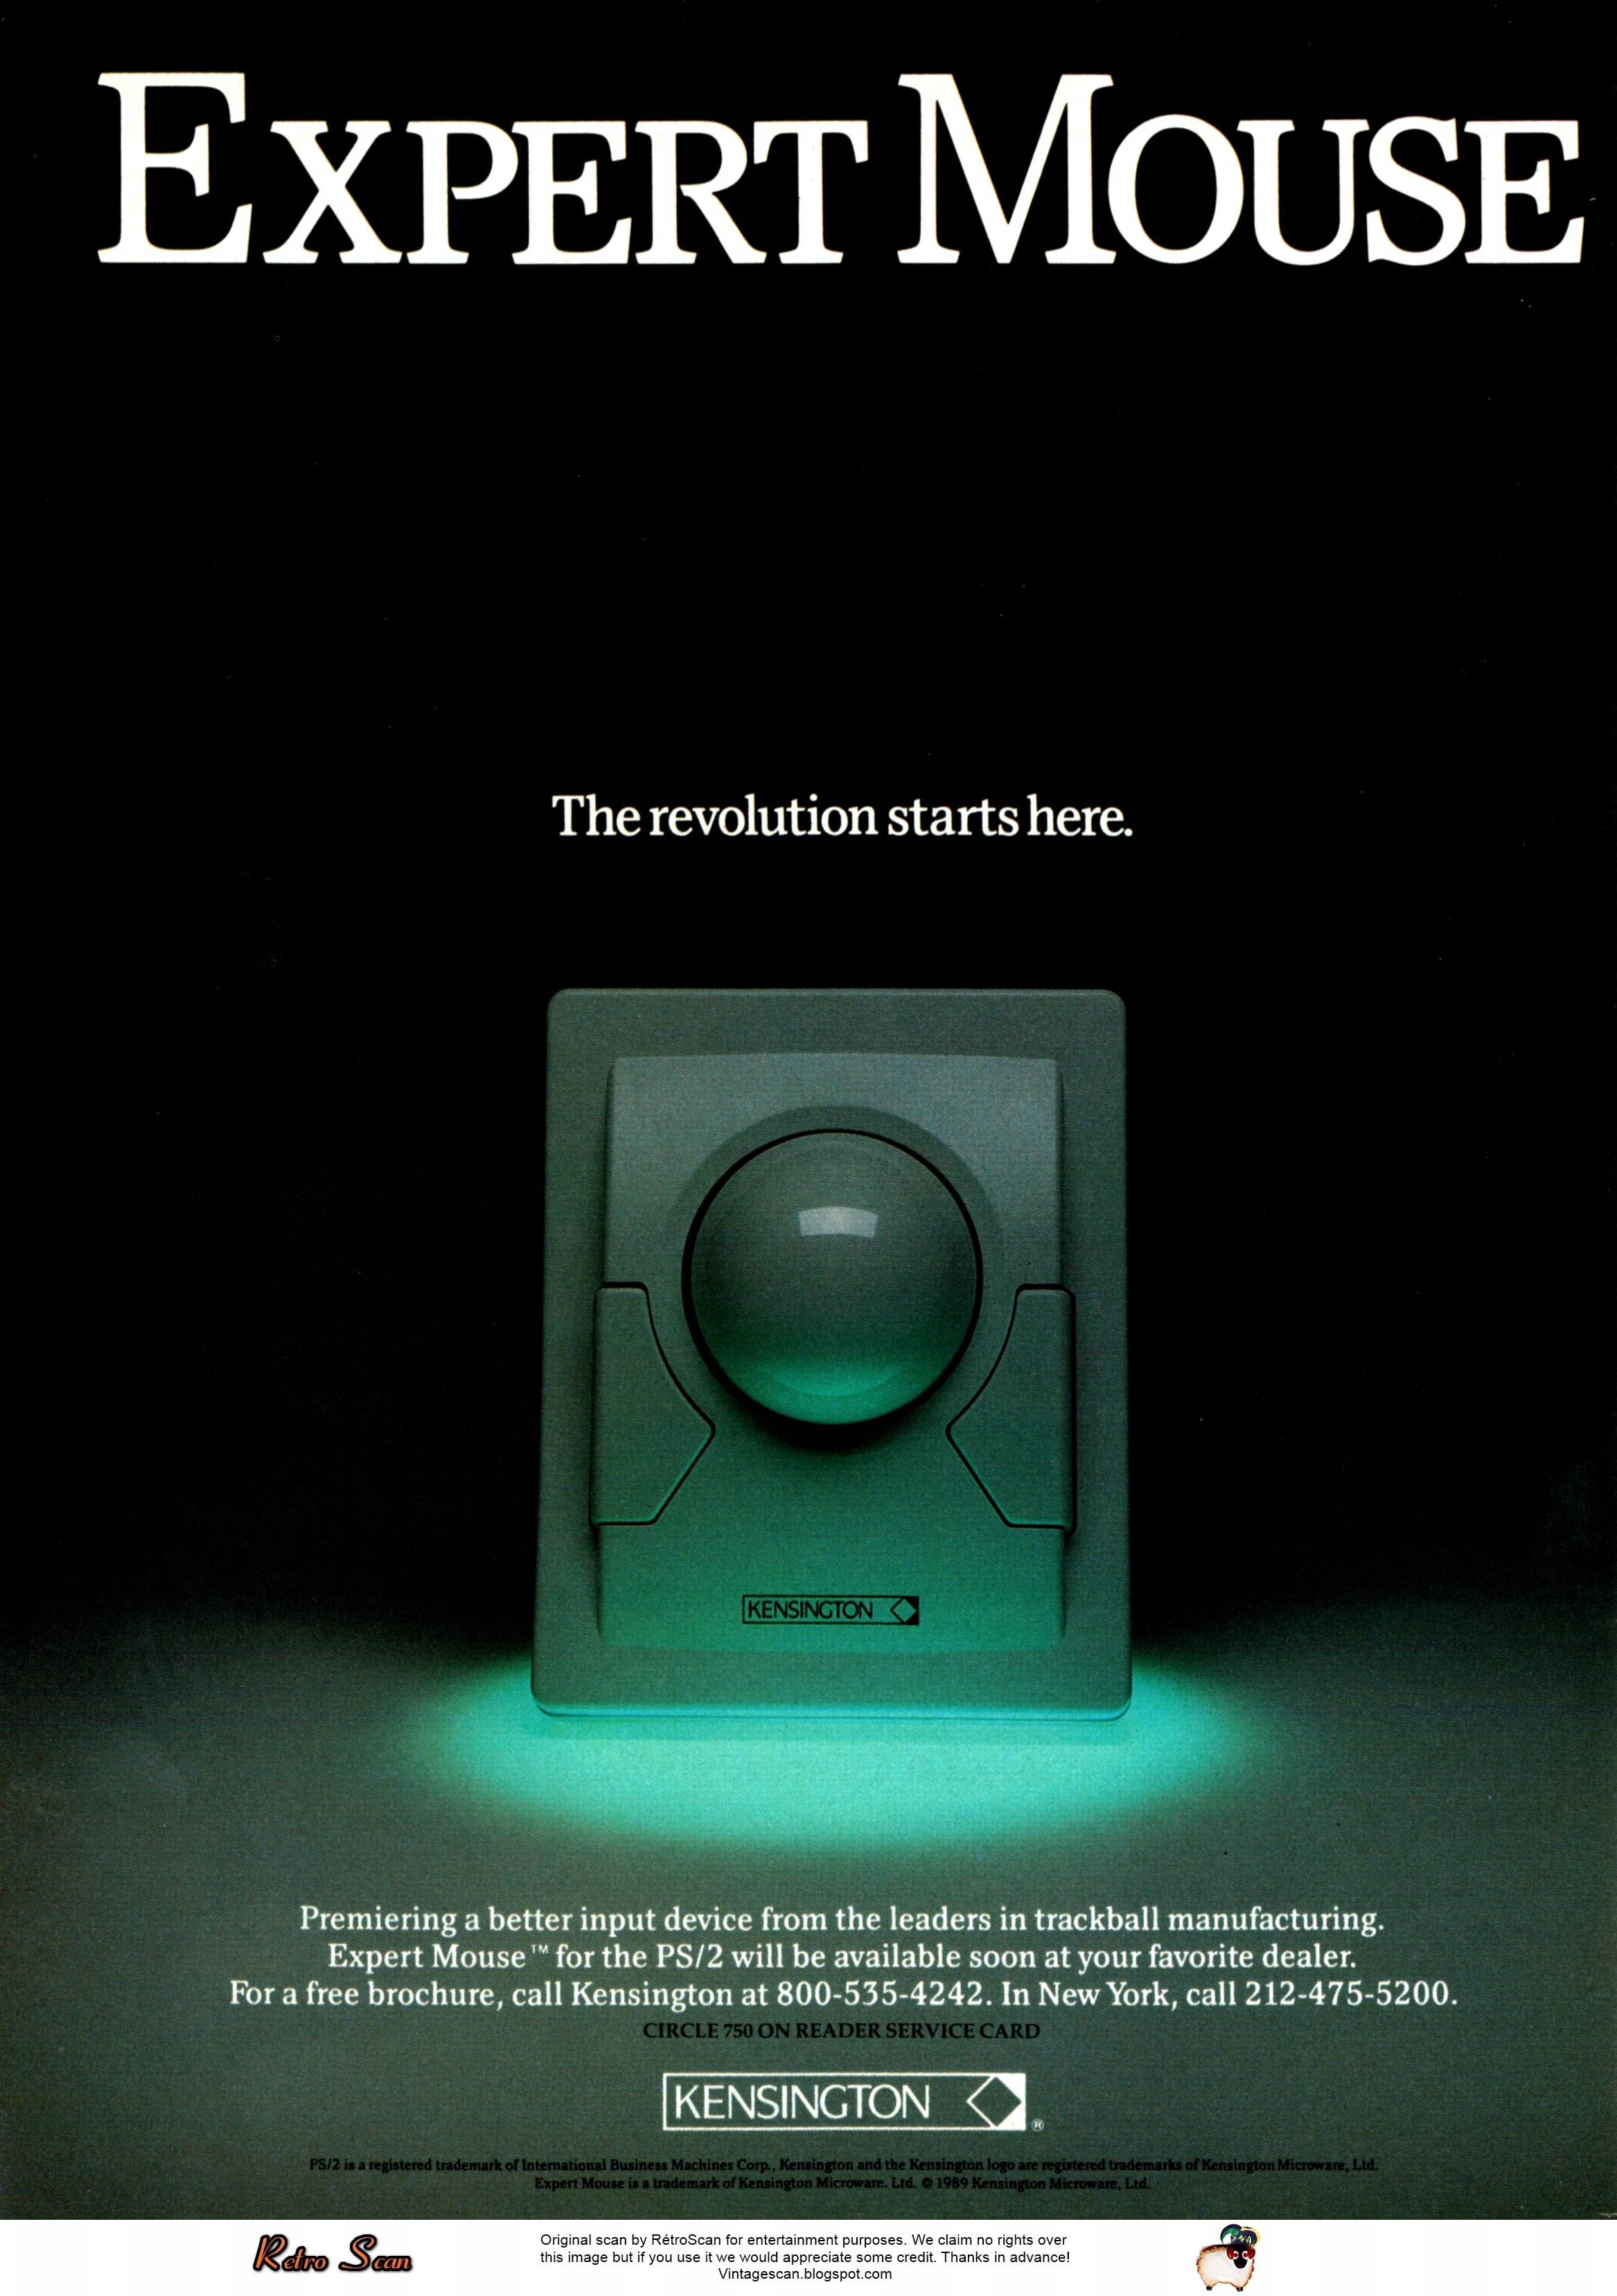 Kensington Expert Mouse 1989 ad